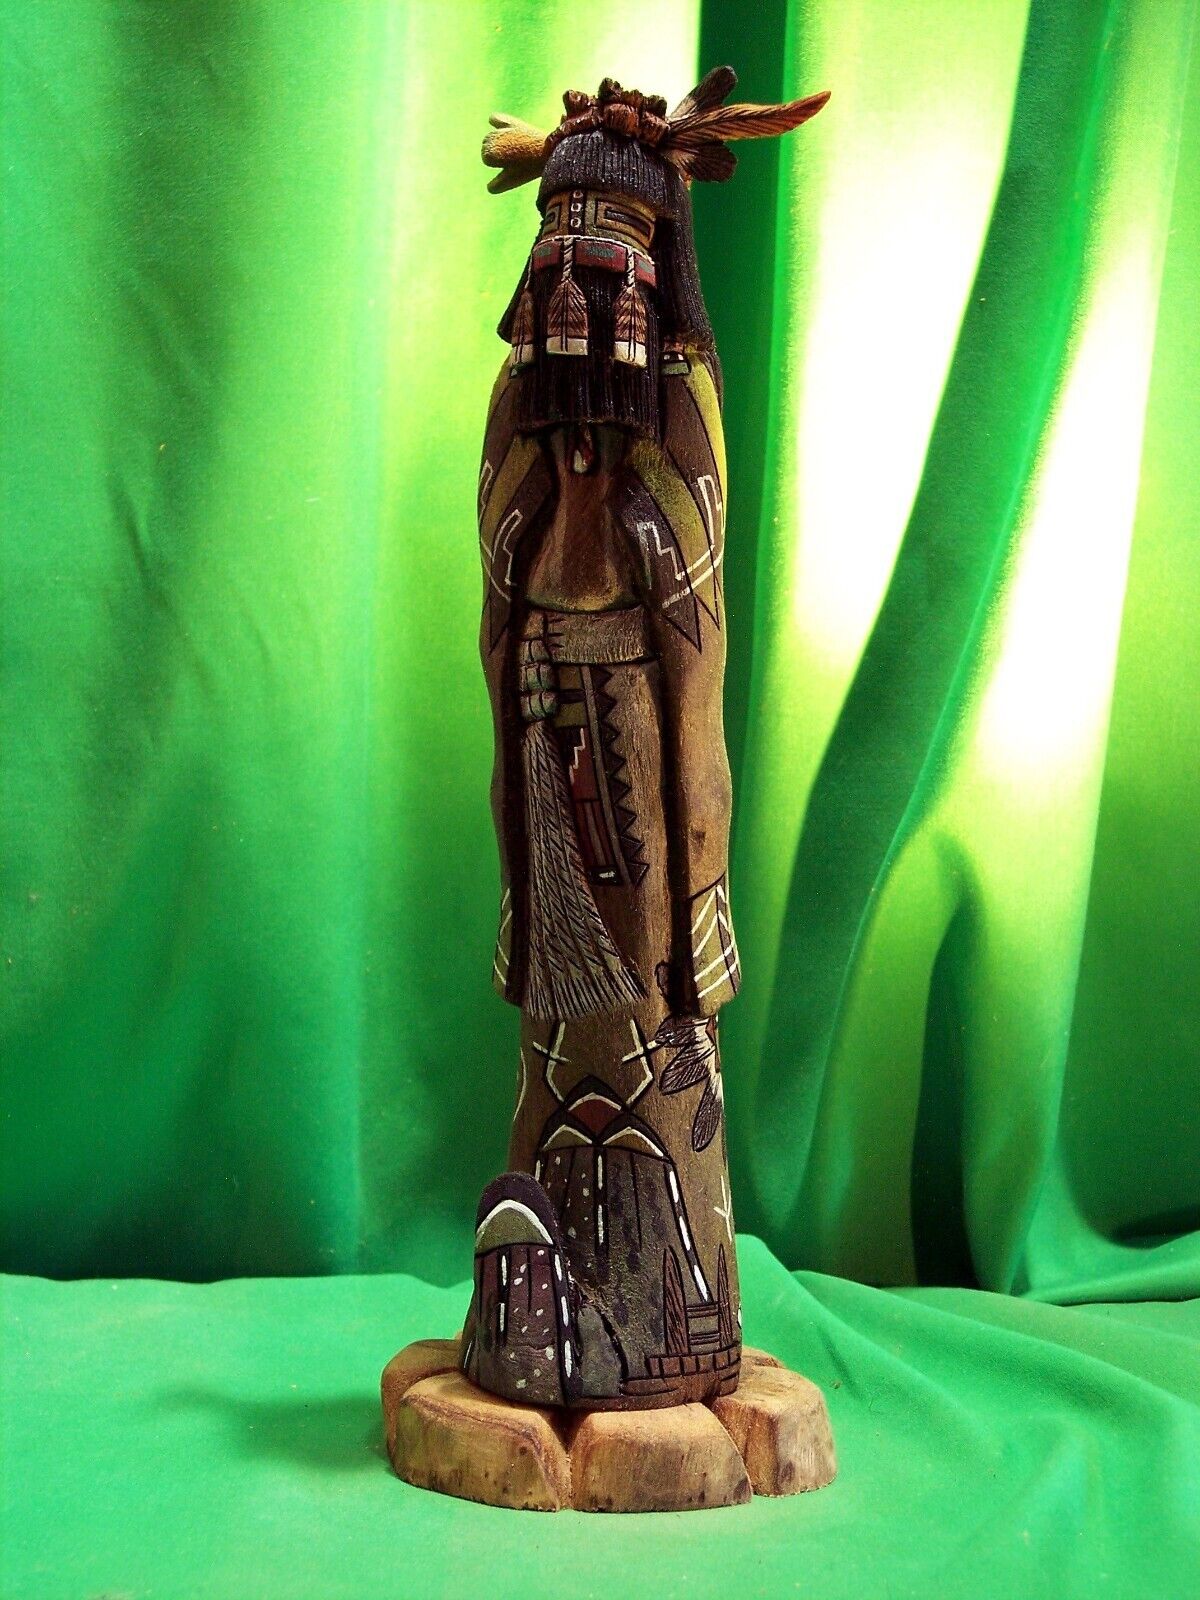 Hopi Kachina Doll - The Turtle Kachina by Wally Grover - Beautiful